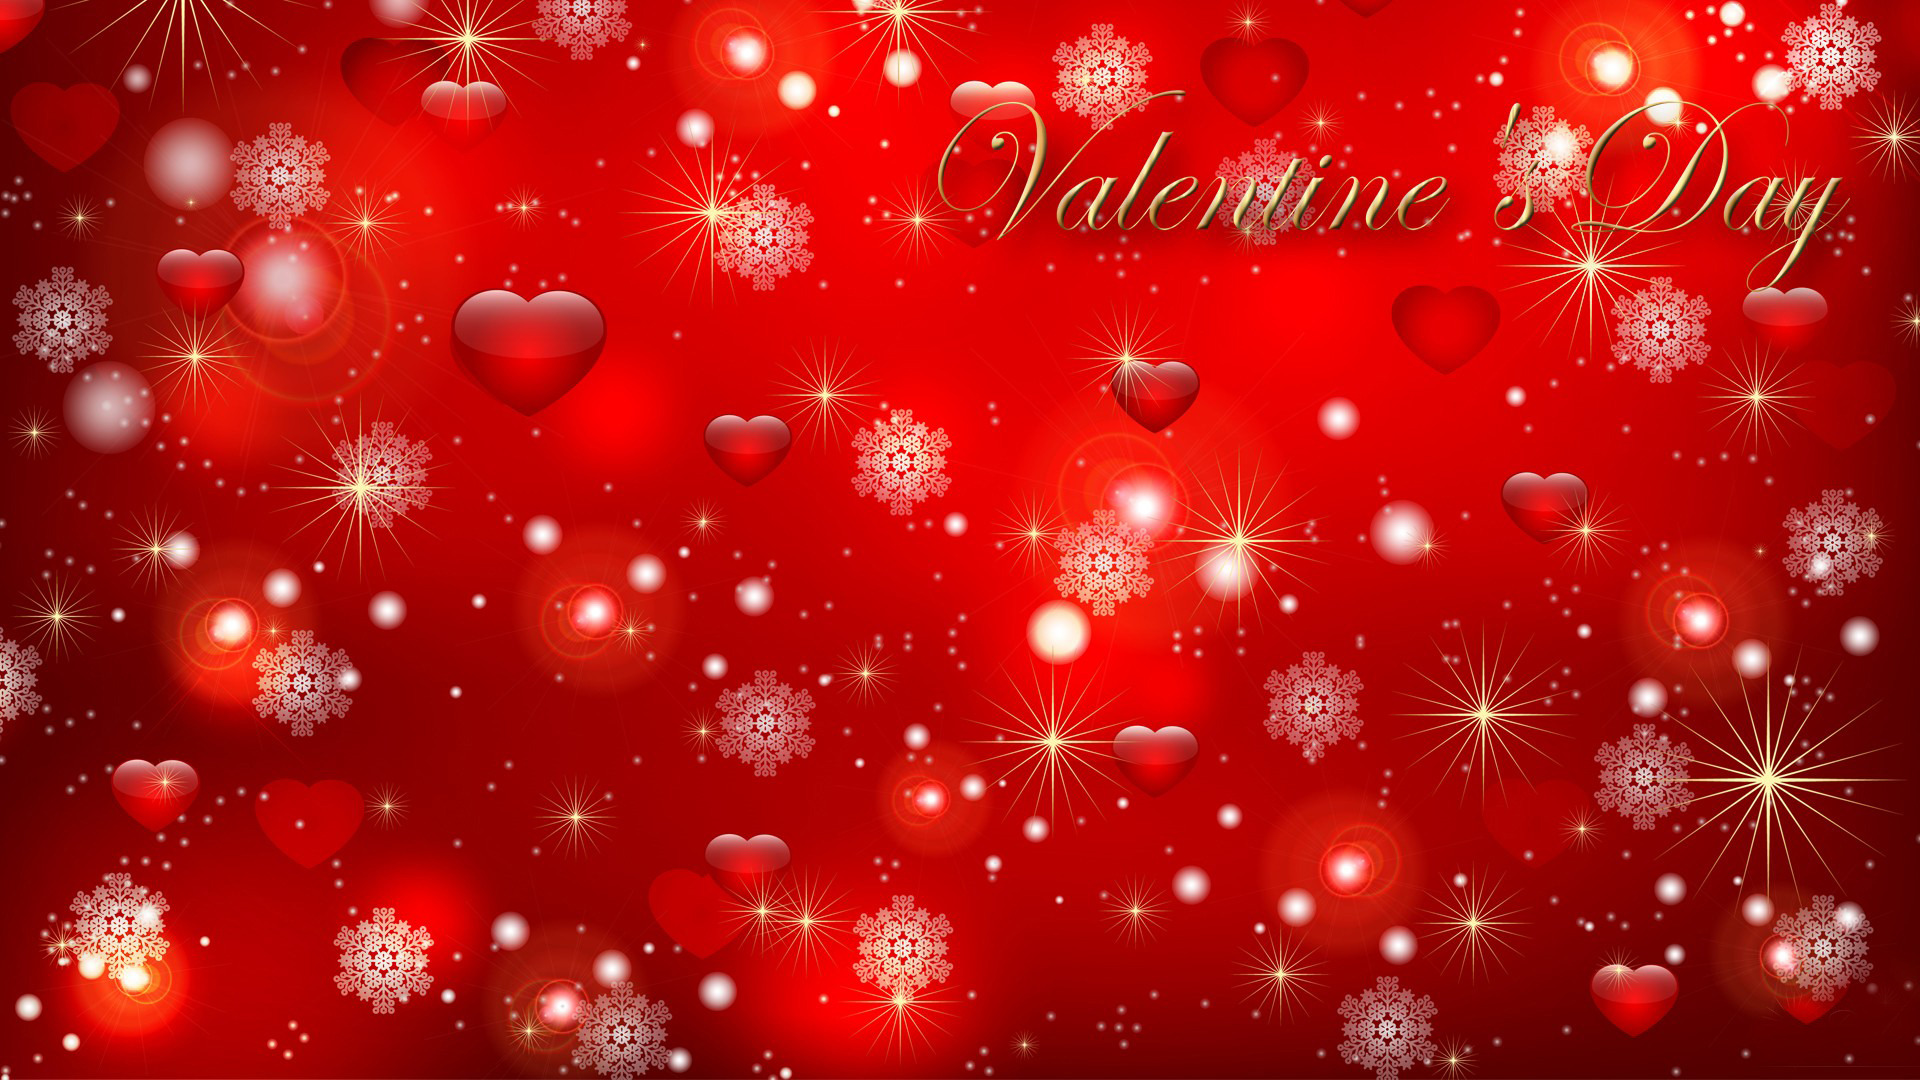 Red Valentine Day Pictures Desktop Wallpaper Gallery